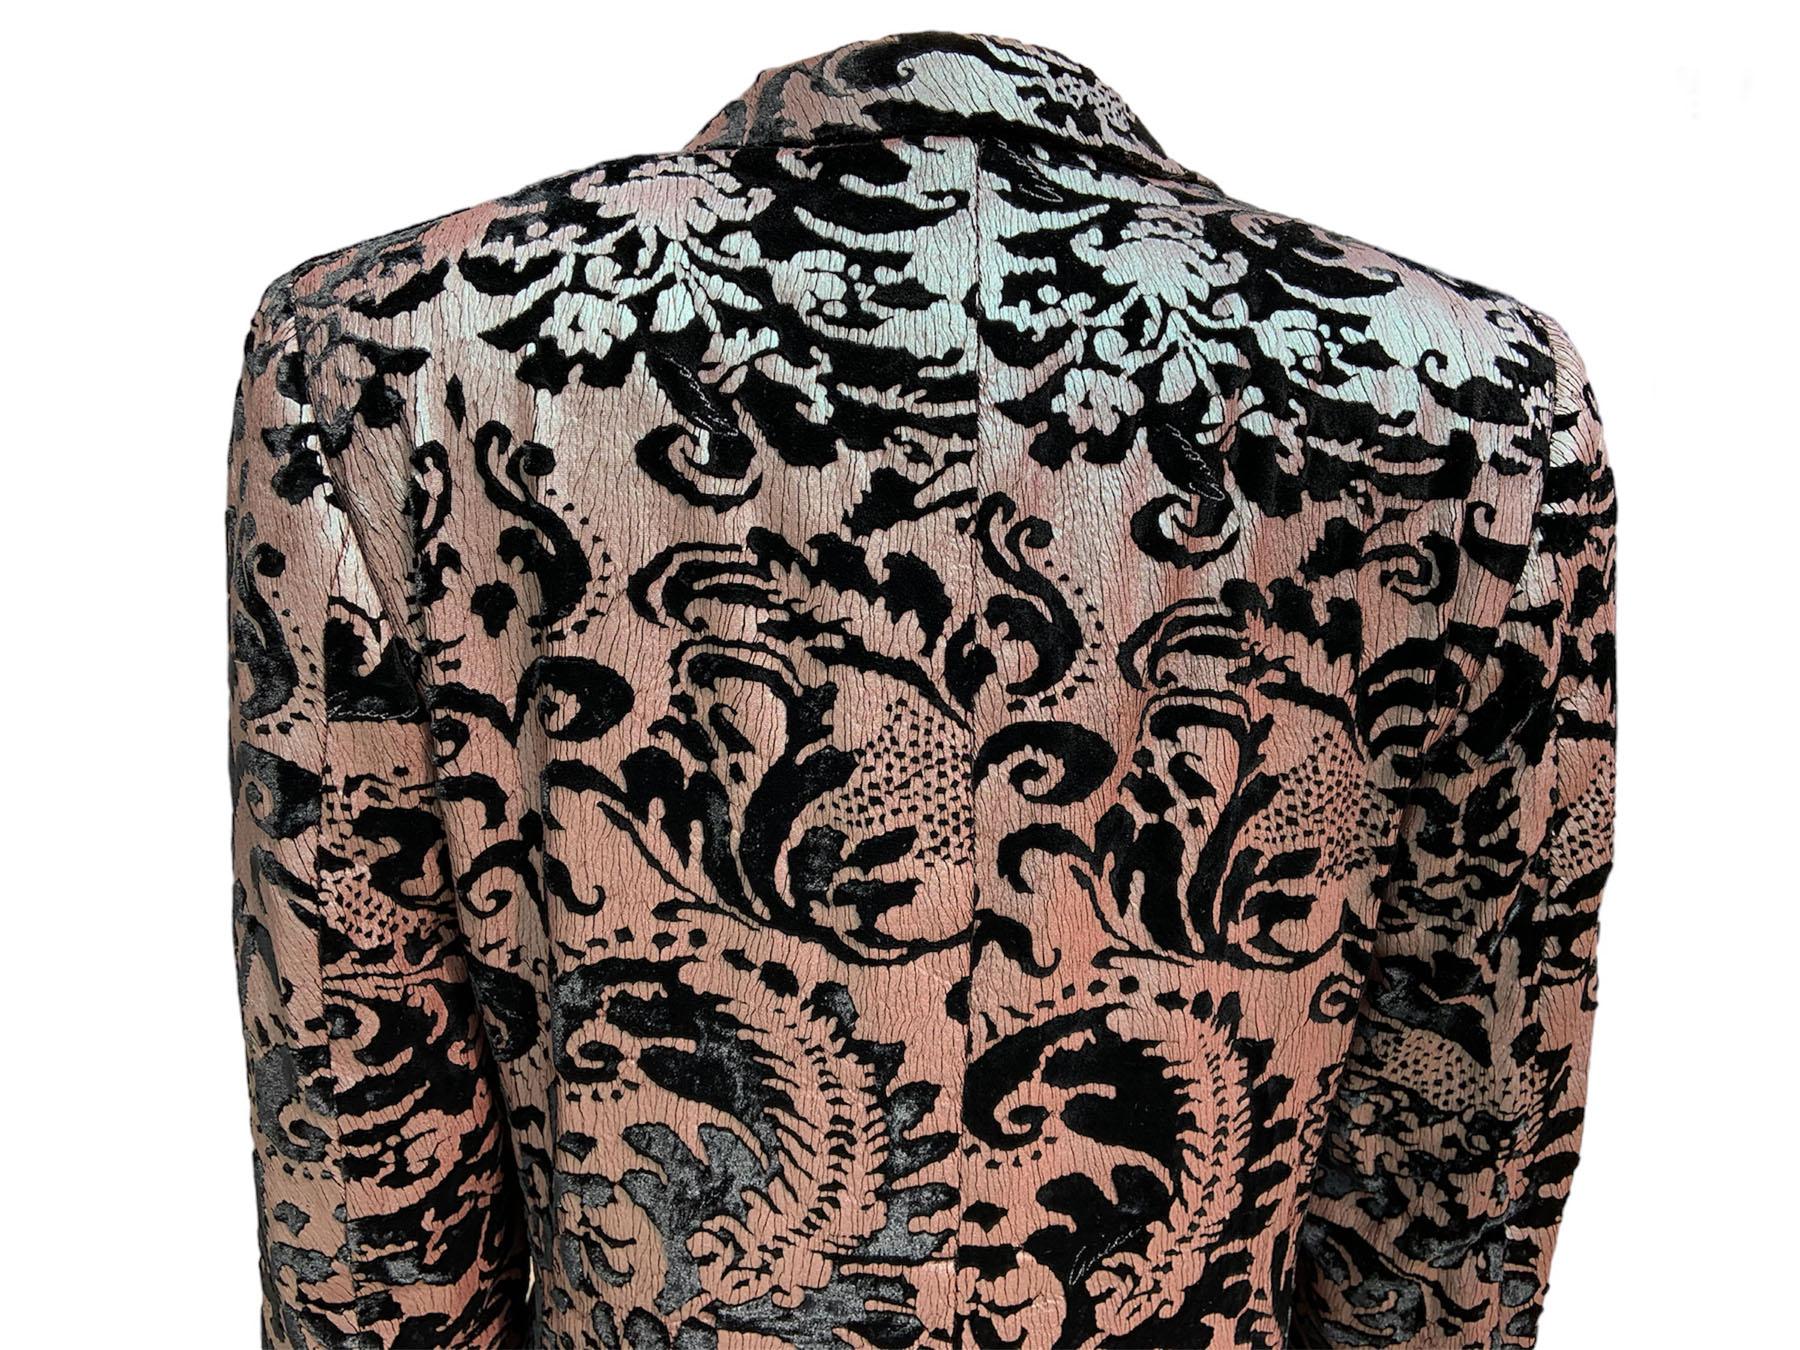 Tom Ford for Gucci SS 2000 Gothic Damask Iridescent Paint Velvet Blazer 48 US 38 For Sale 5